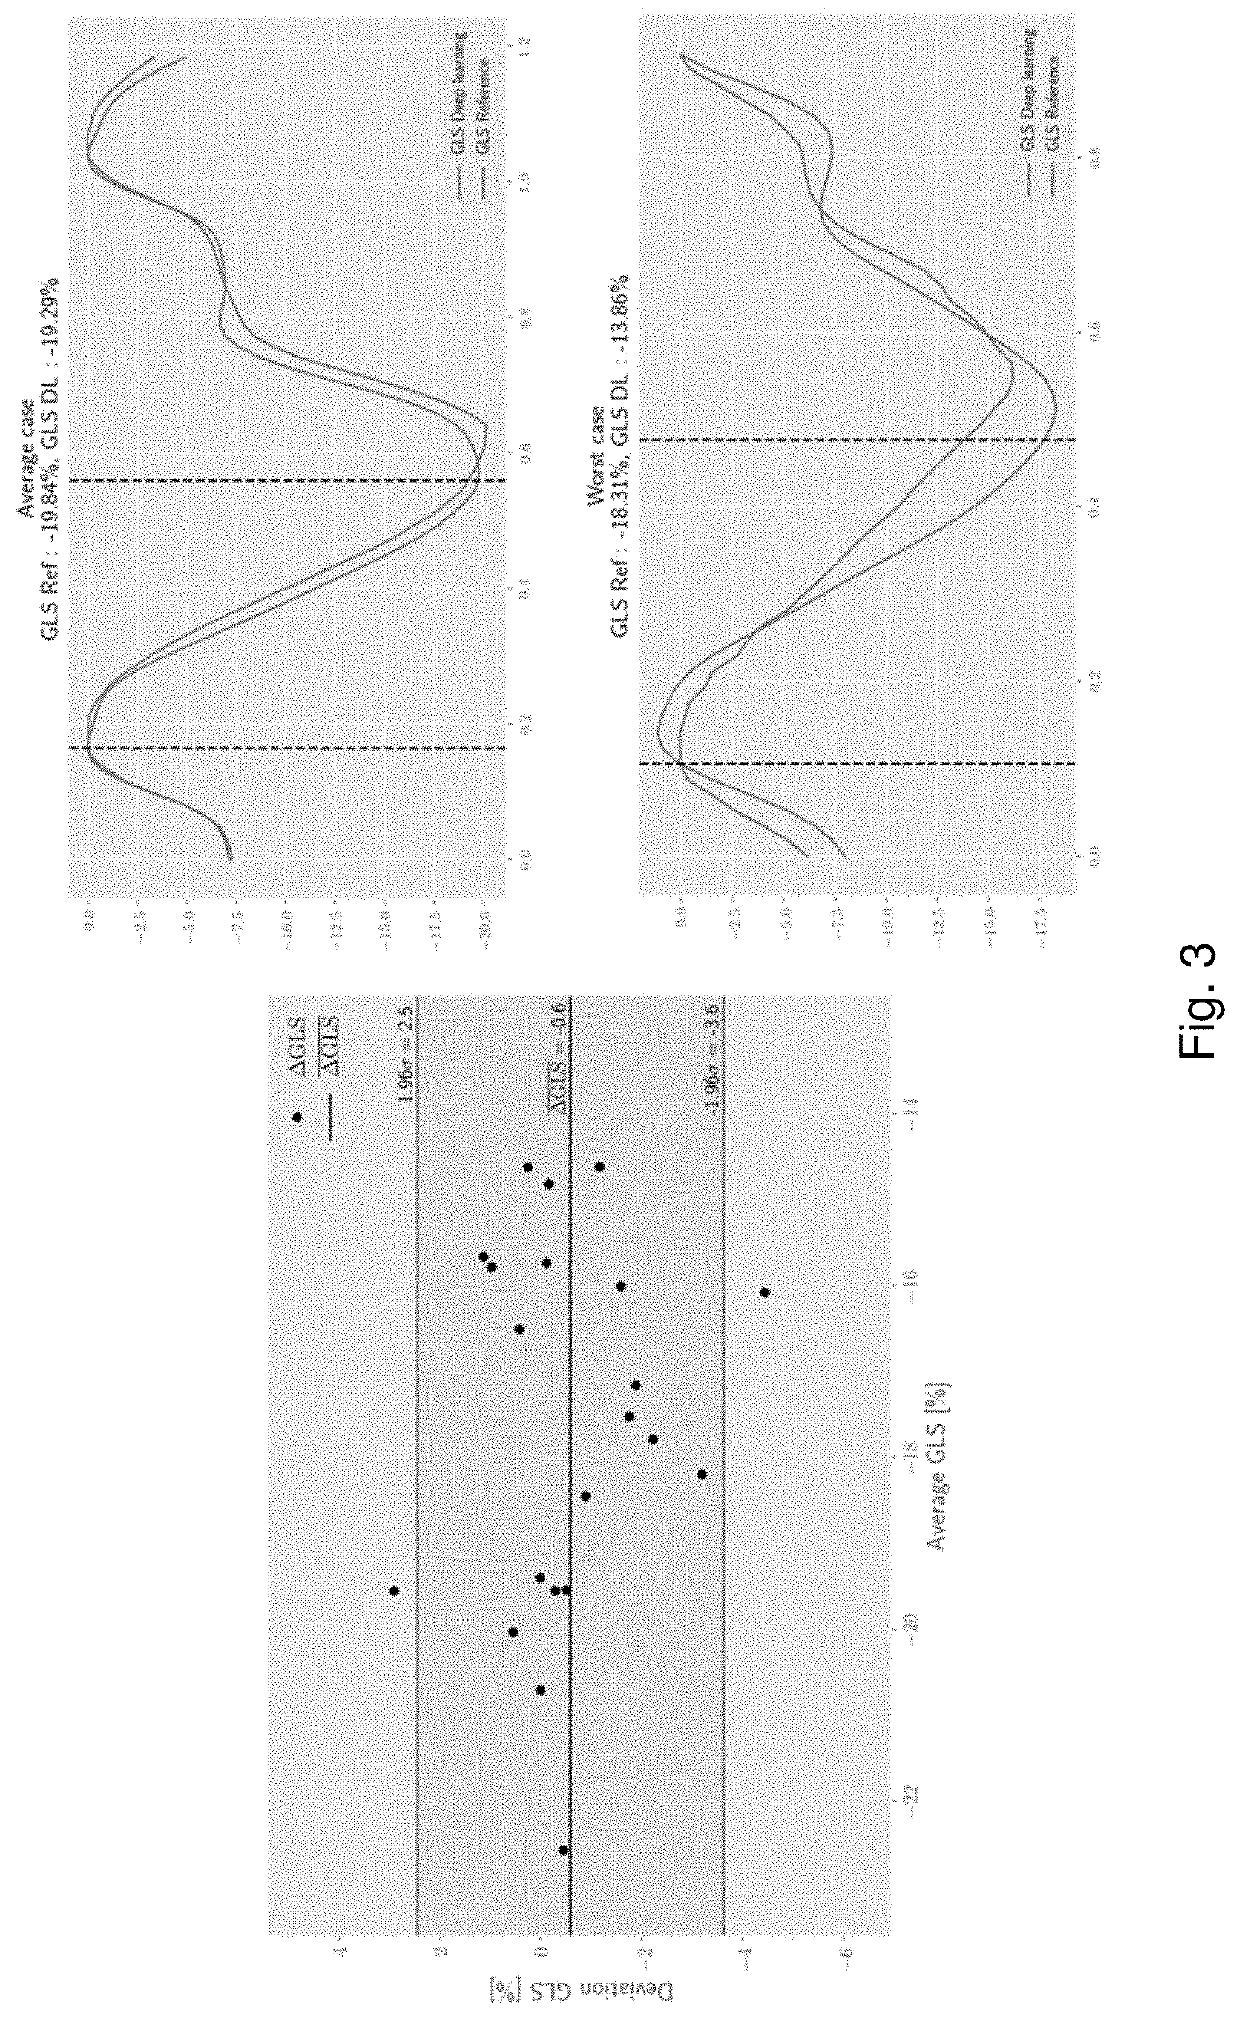 Functional measurements in echocardiography